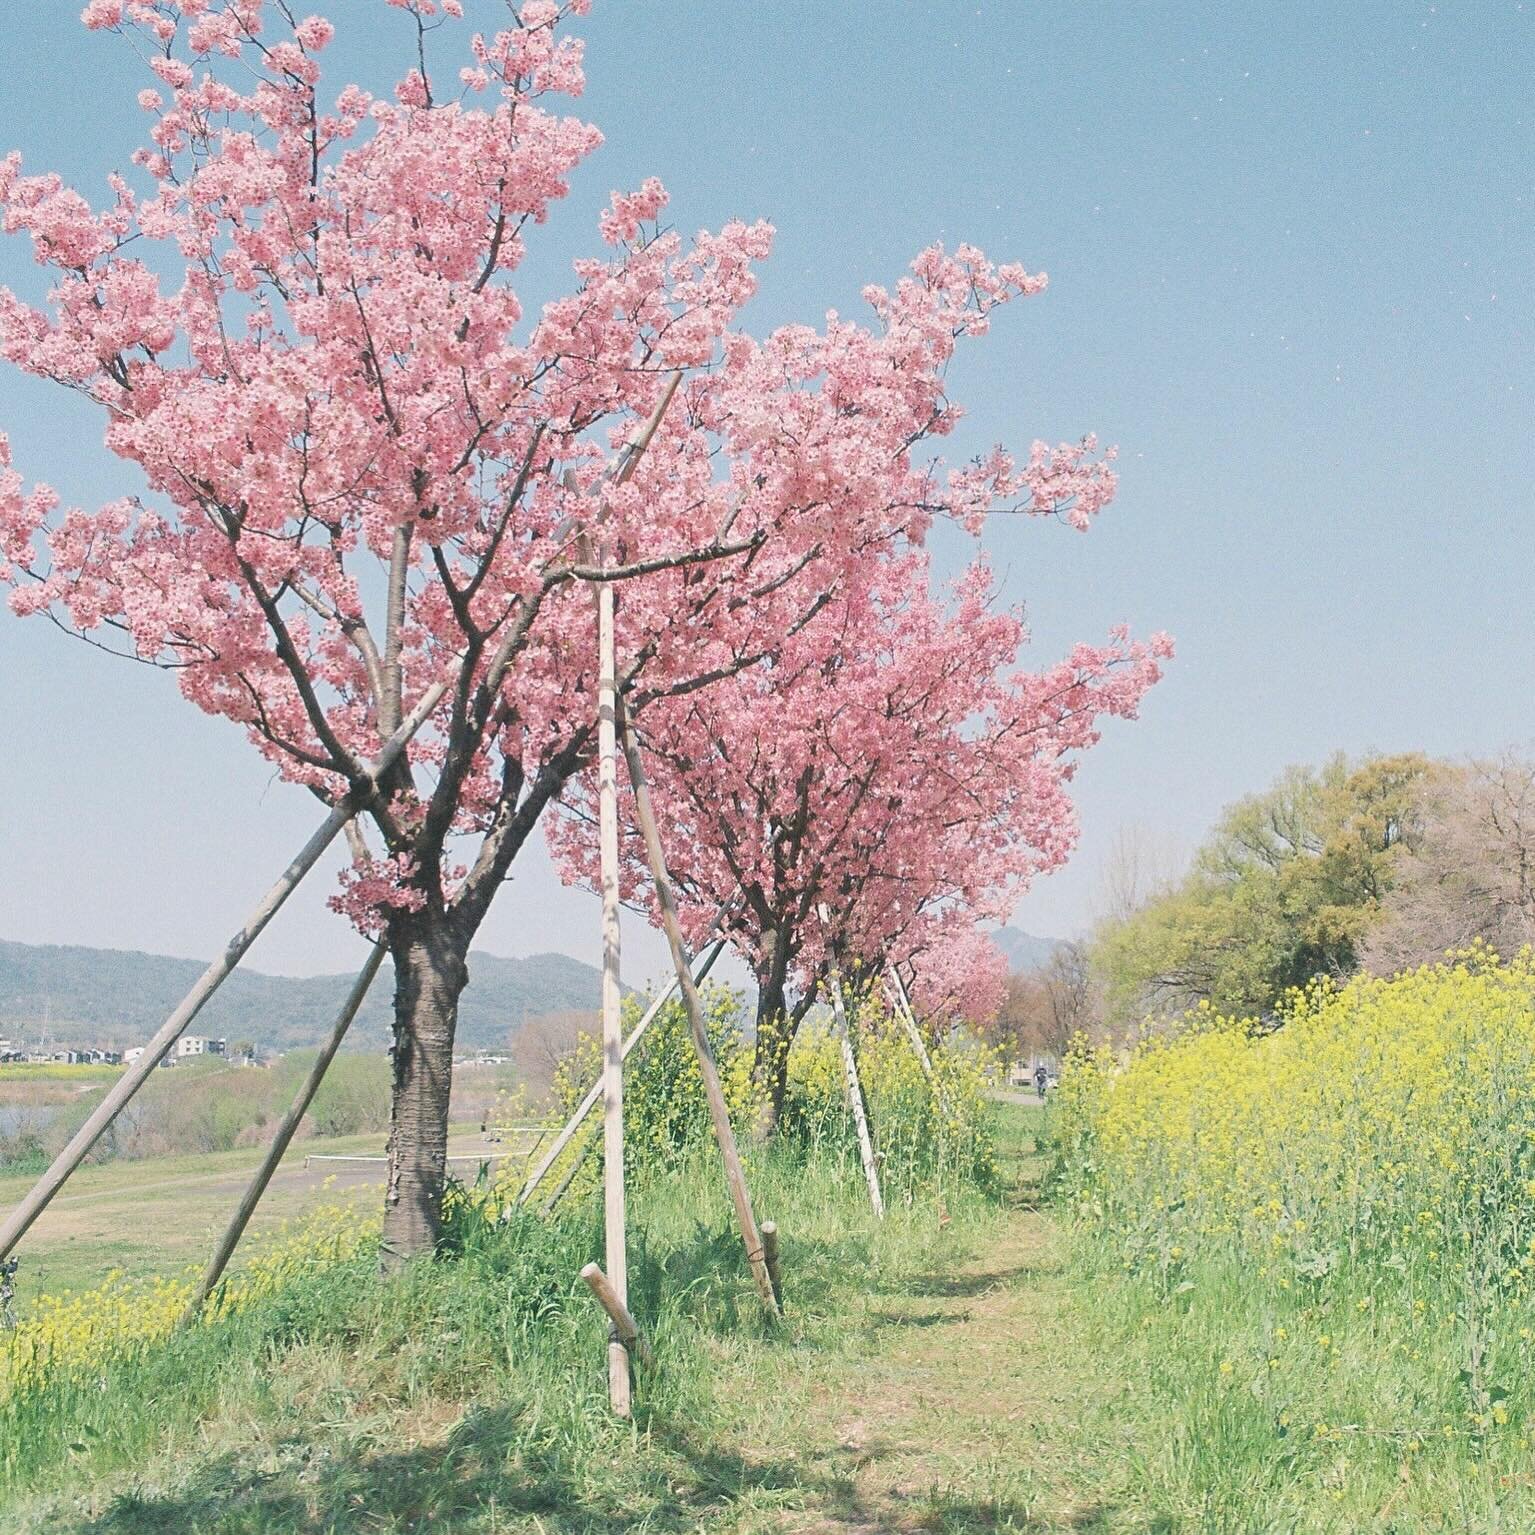 Cherry blossoms paint a fleeting masterpiece.

#kyoto
#kodakultramax400 

#everybodyfilm #ifyouleave #filmdiscovered #lensculture #afilmcosmos #somewheremagazine #analoguevibes #thefilmrenaissance #filmphotomag #thirtyfivefuckingmillimeter #infilmwet